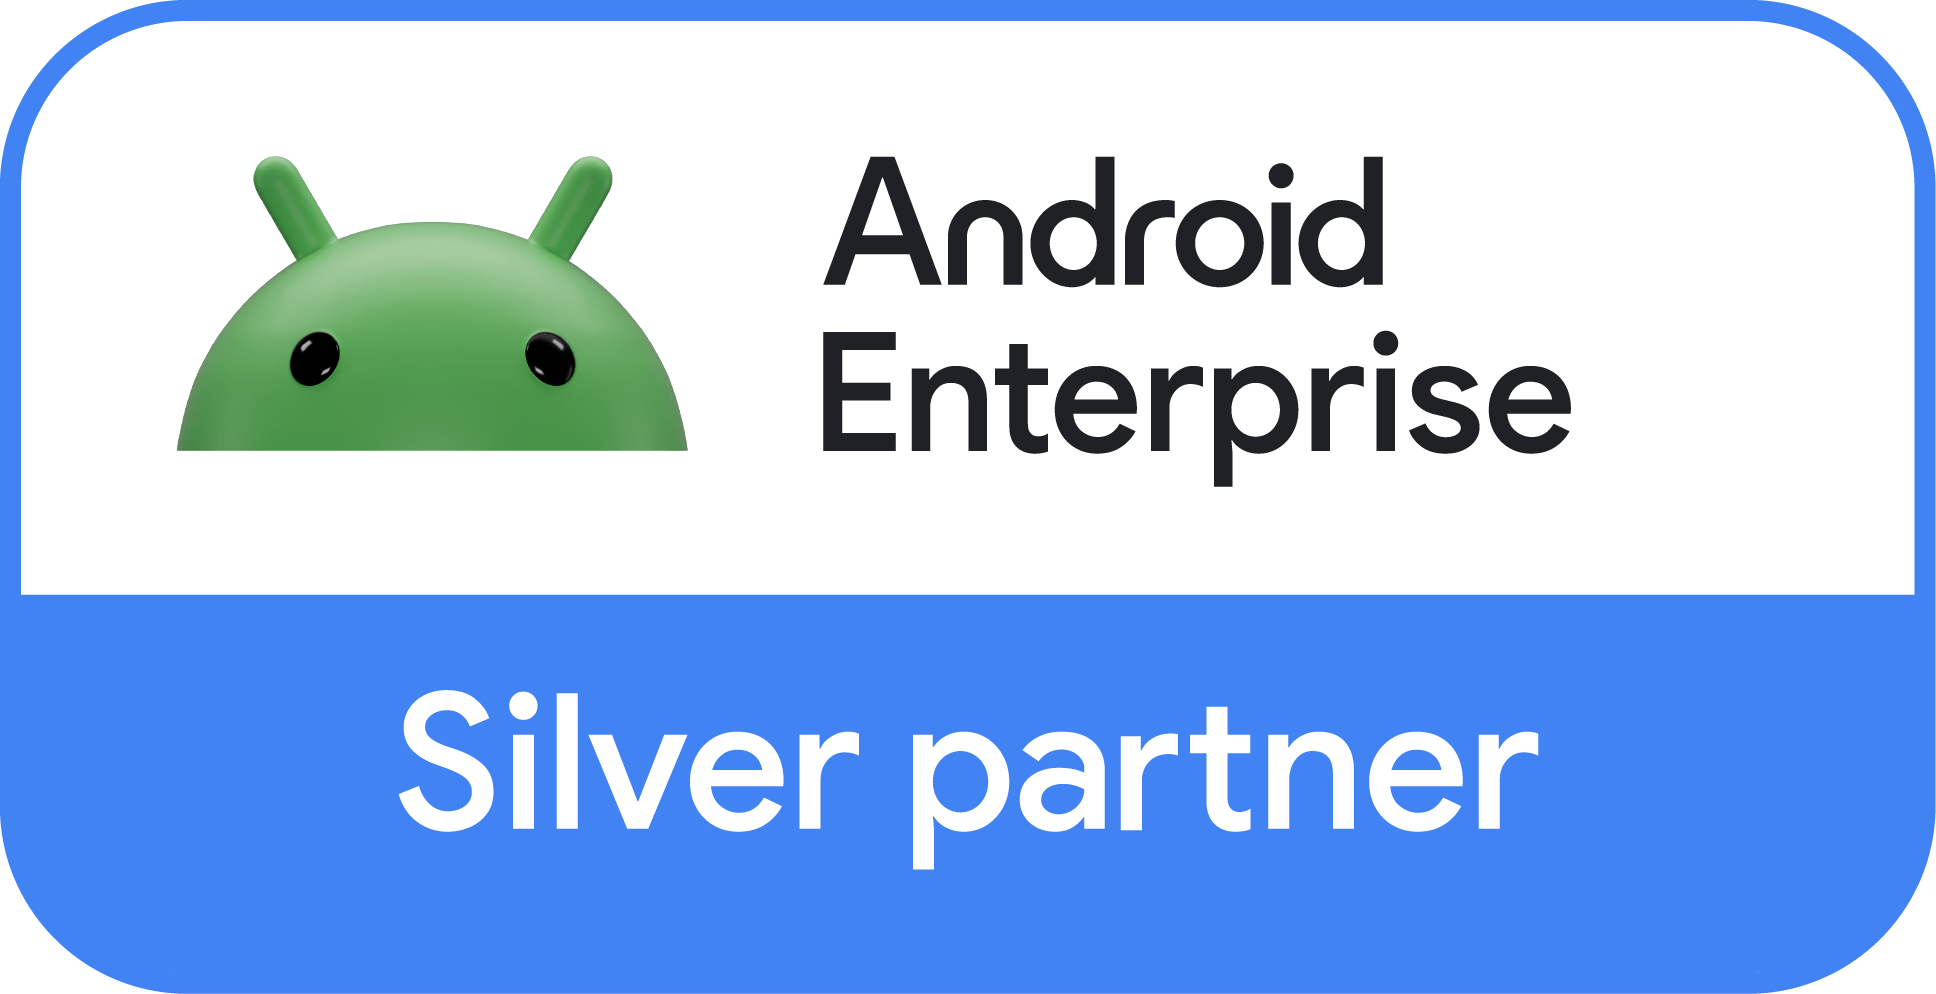 Android Enterprise Silver Partner